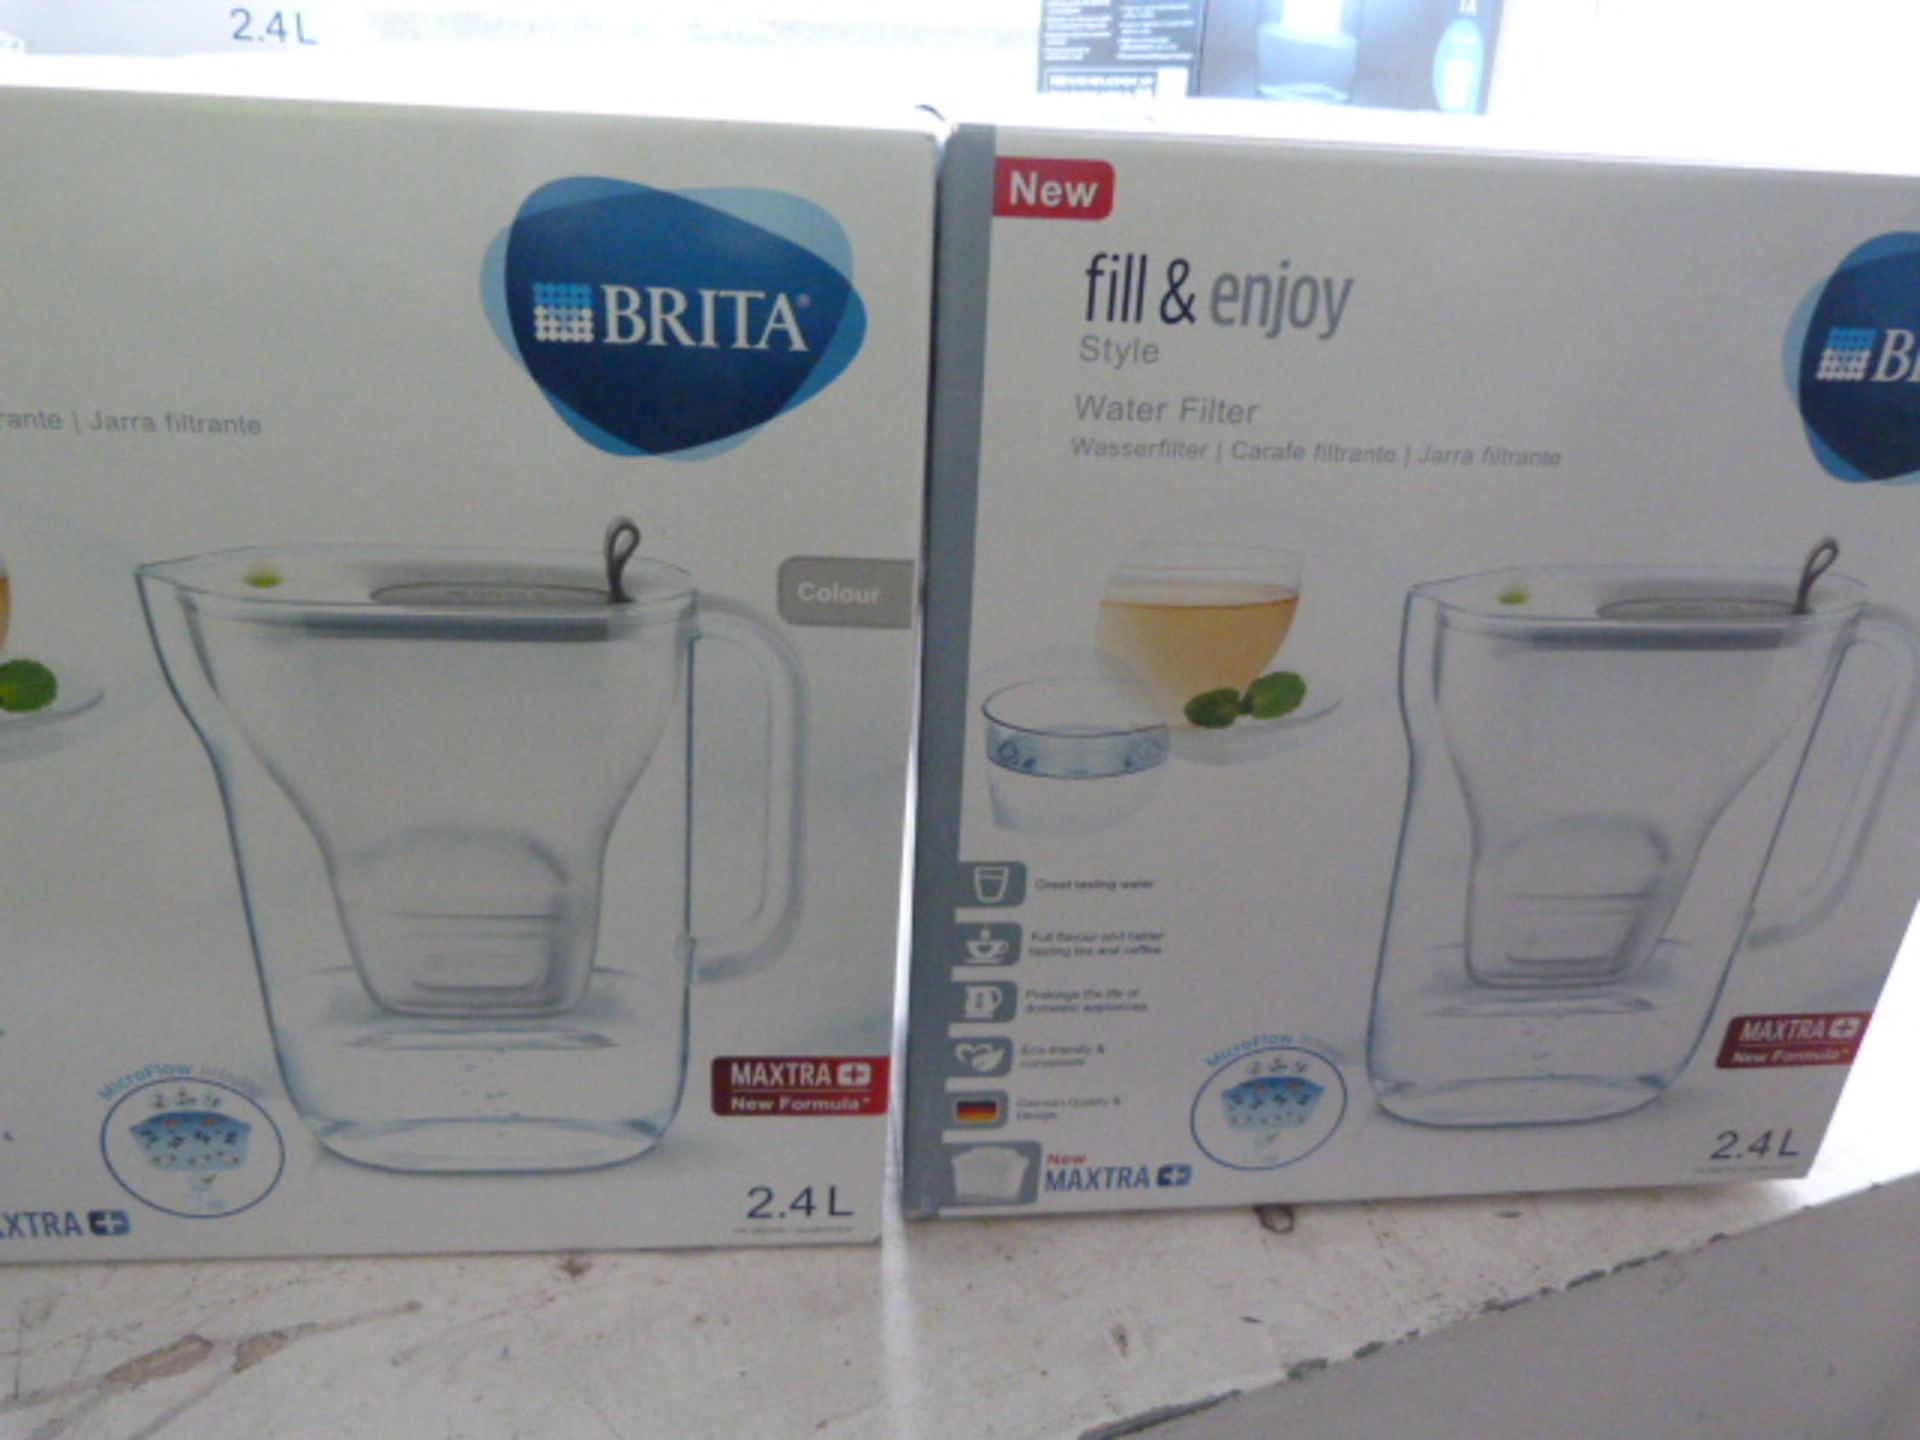 *Two Brita "Fill & Enjoy" Water Filters